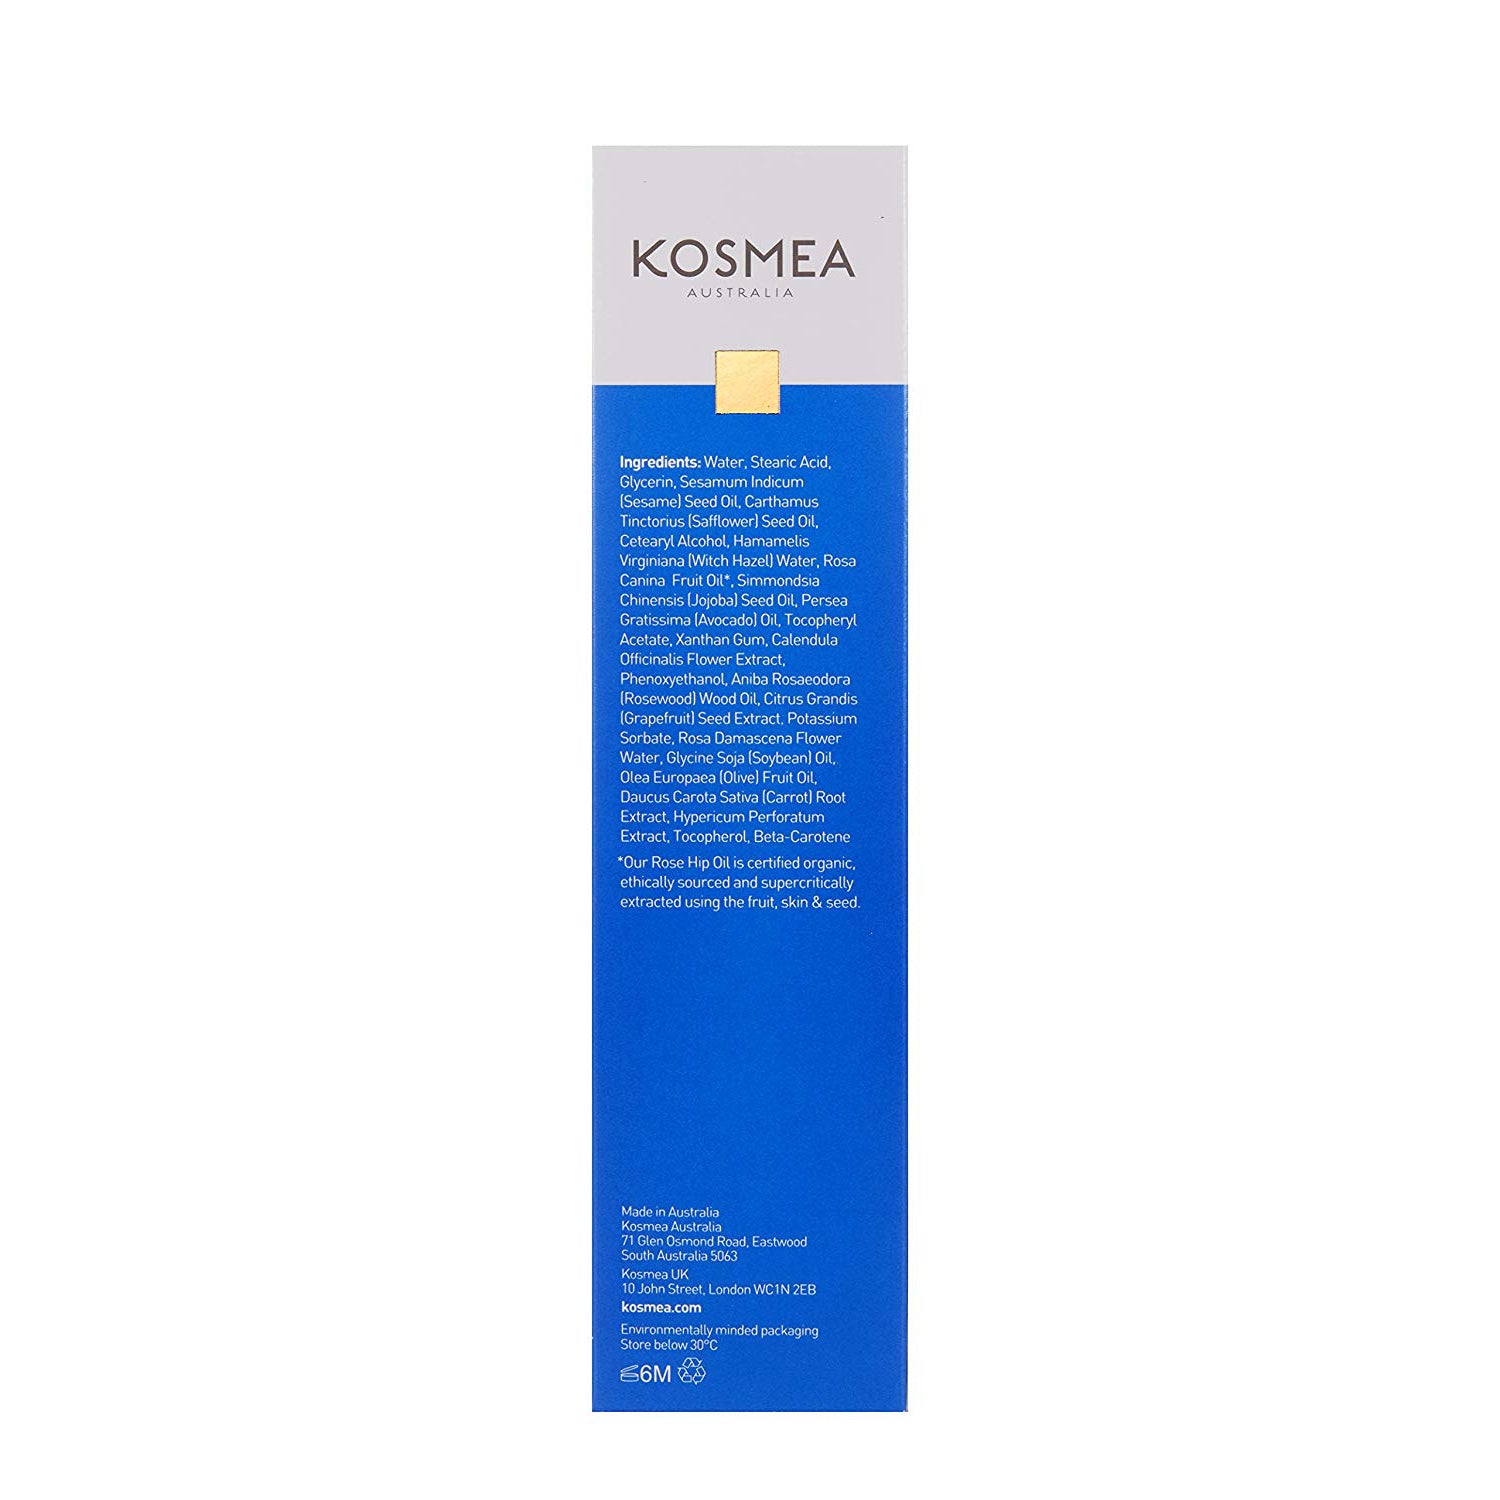 Kosmea Purifying Cream Cleanser 150ml Packaging Rear View